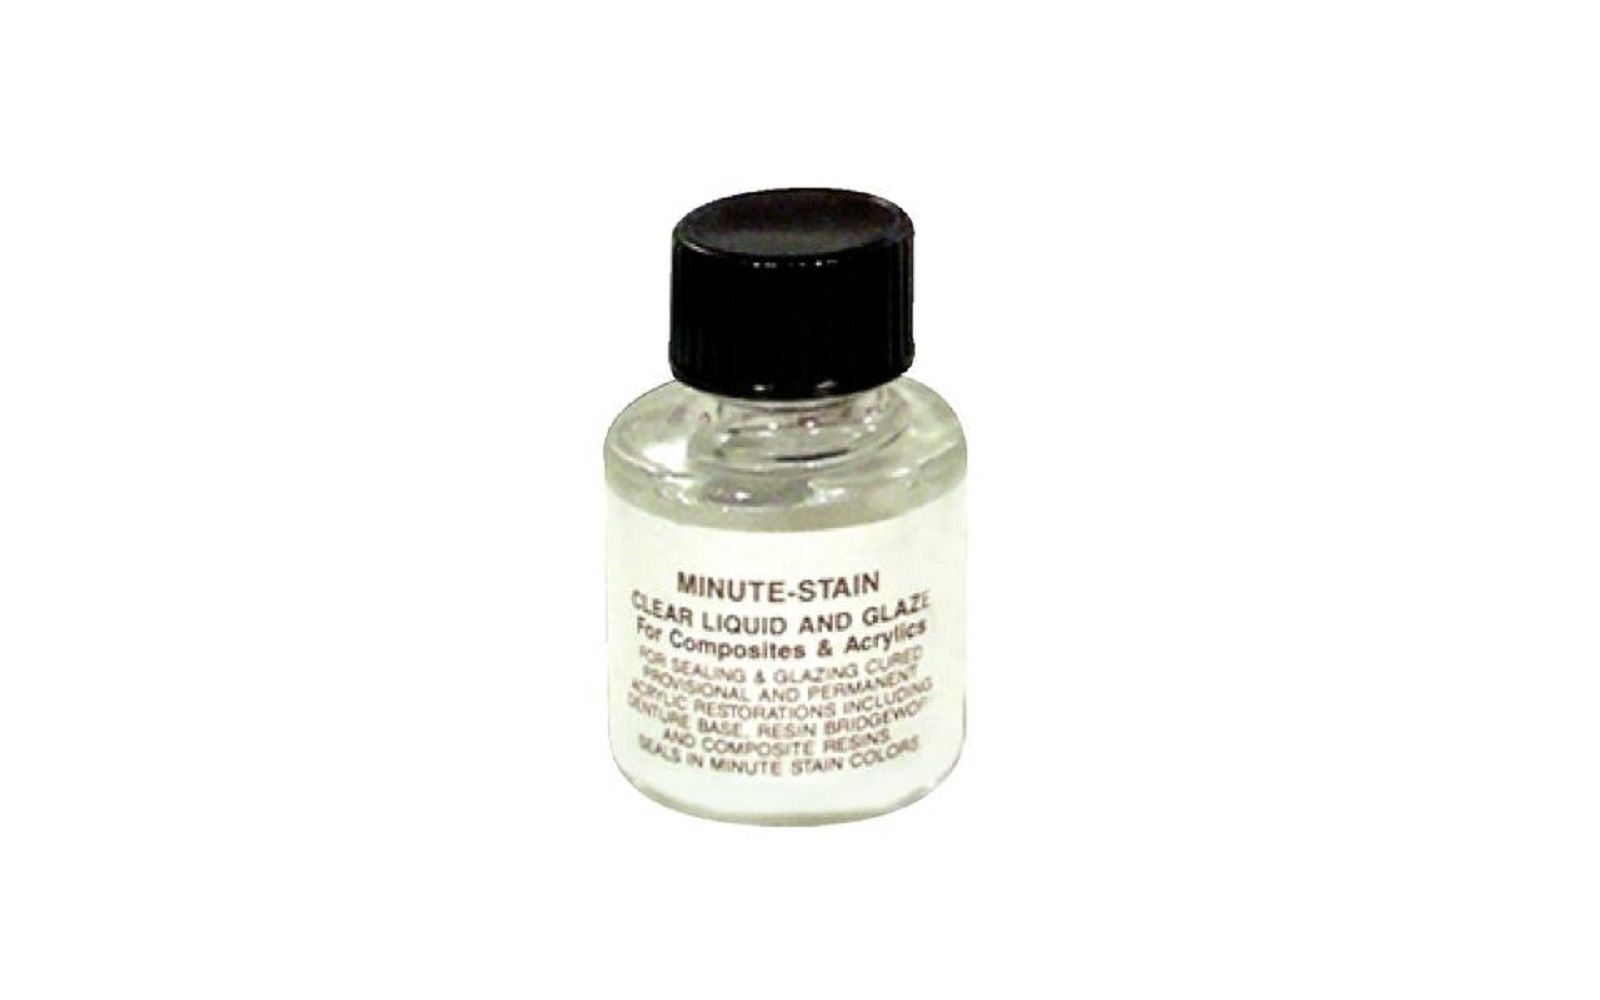 Minute stain clear liquid glaze, 1/2 oz (12 cc) bottle